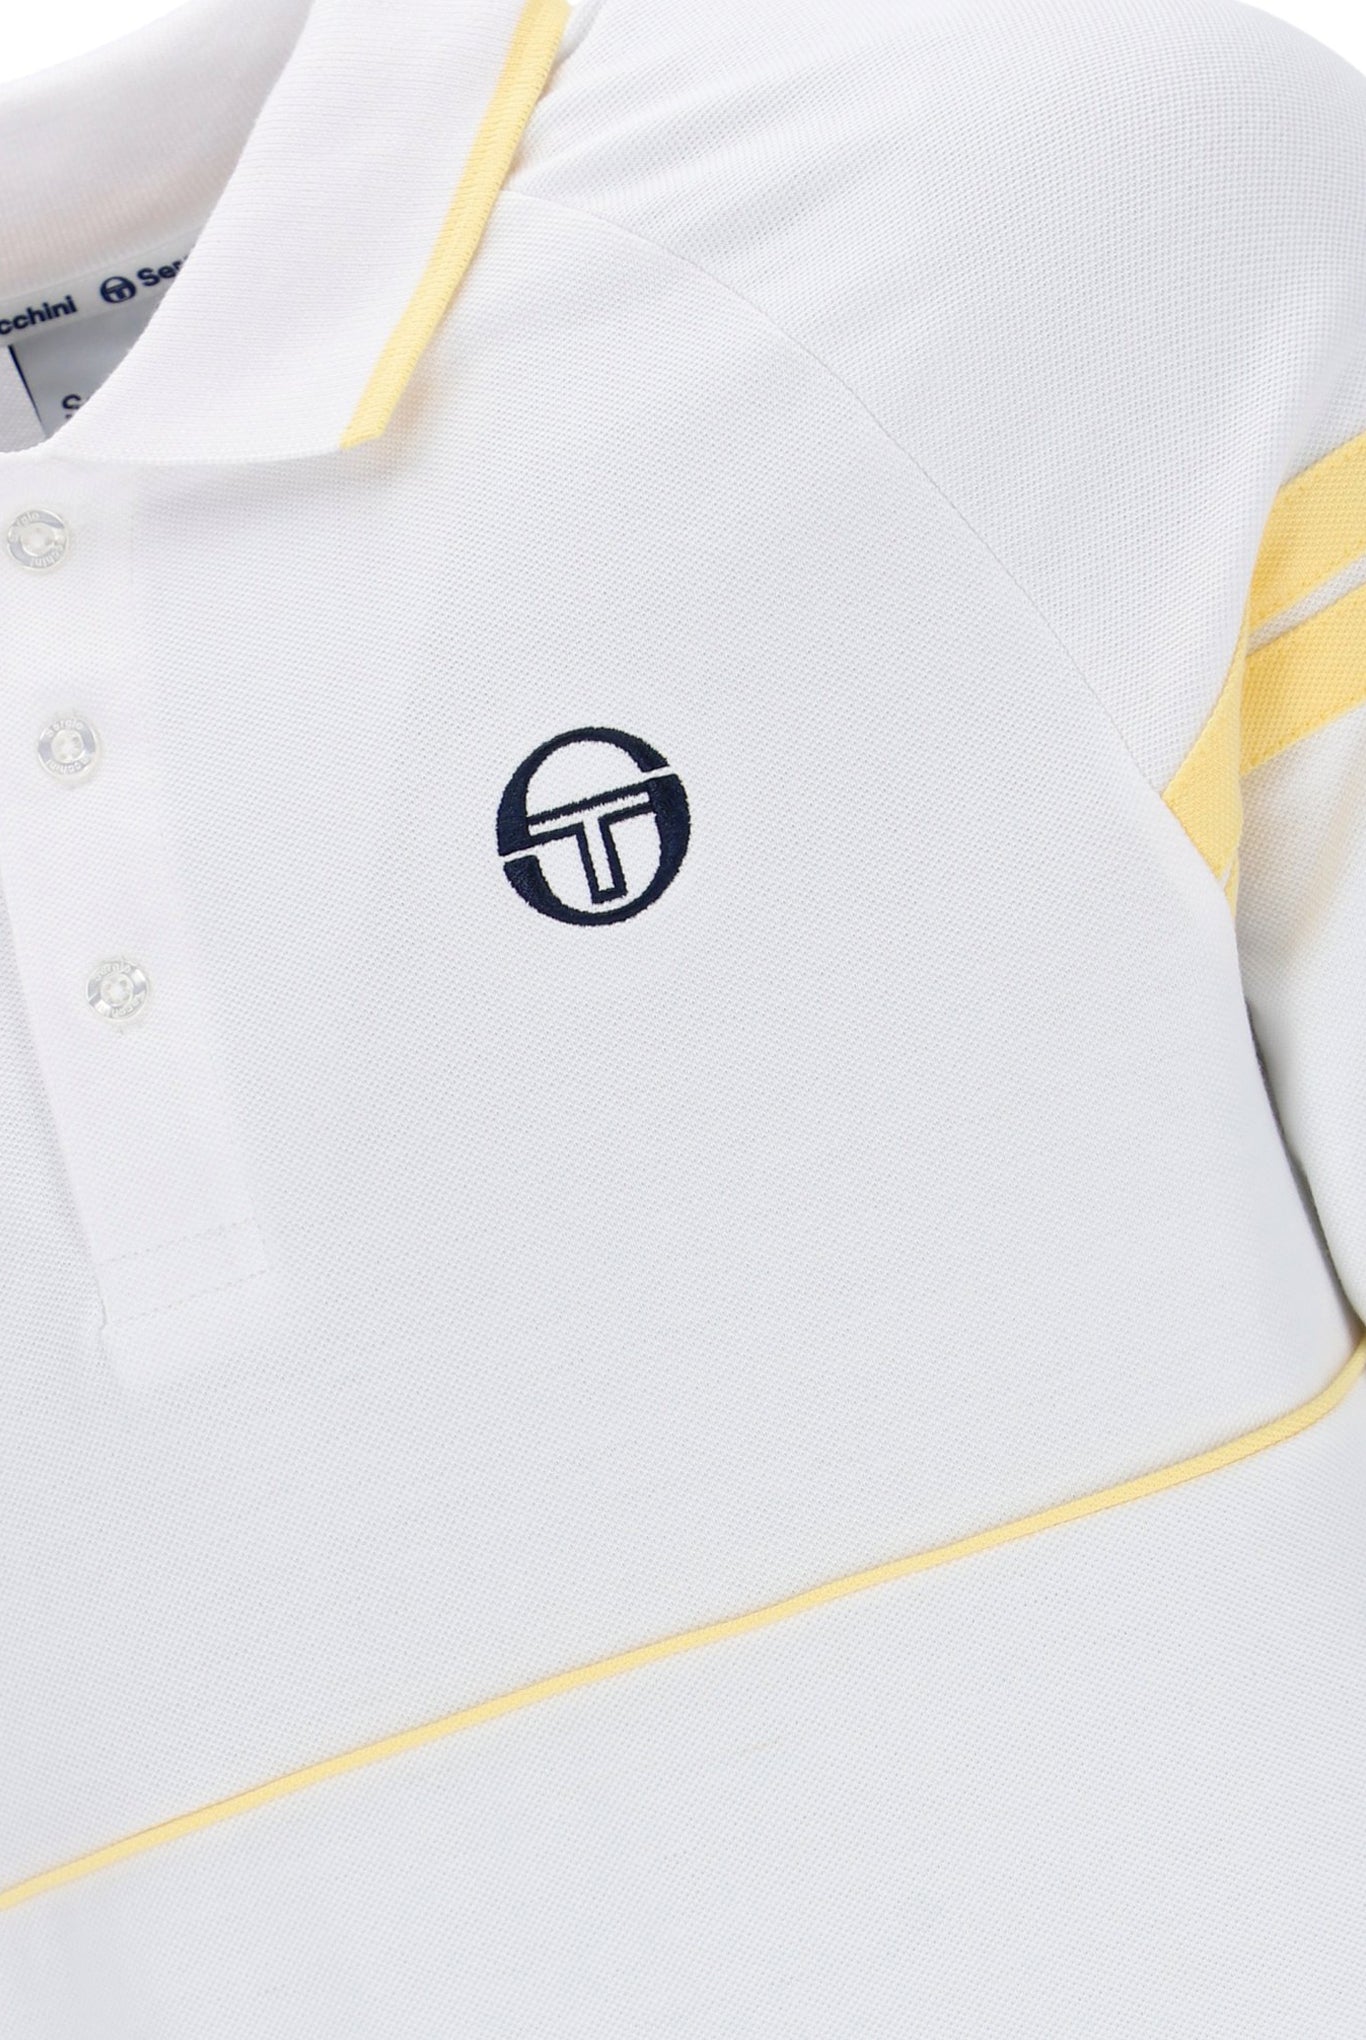 SERGIO TACCHINI Cambio Polo Shirt White & Golden